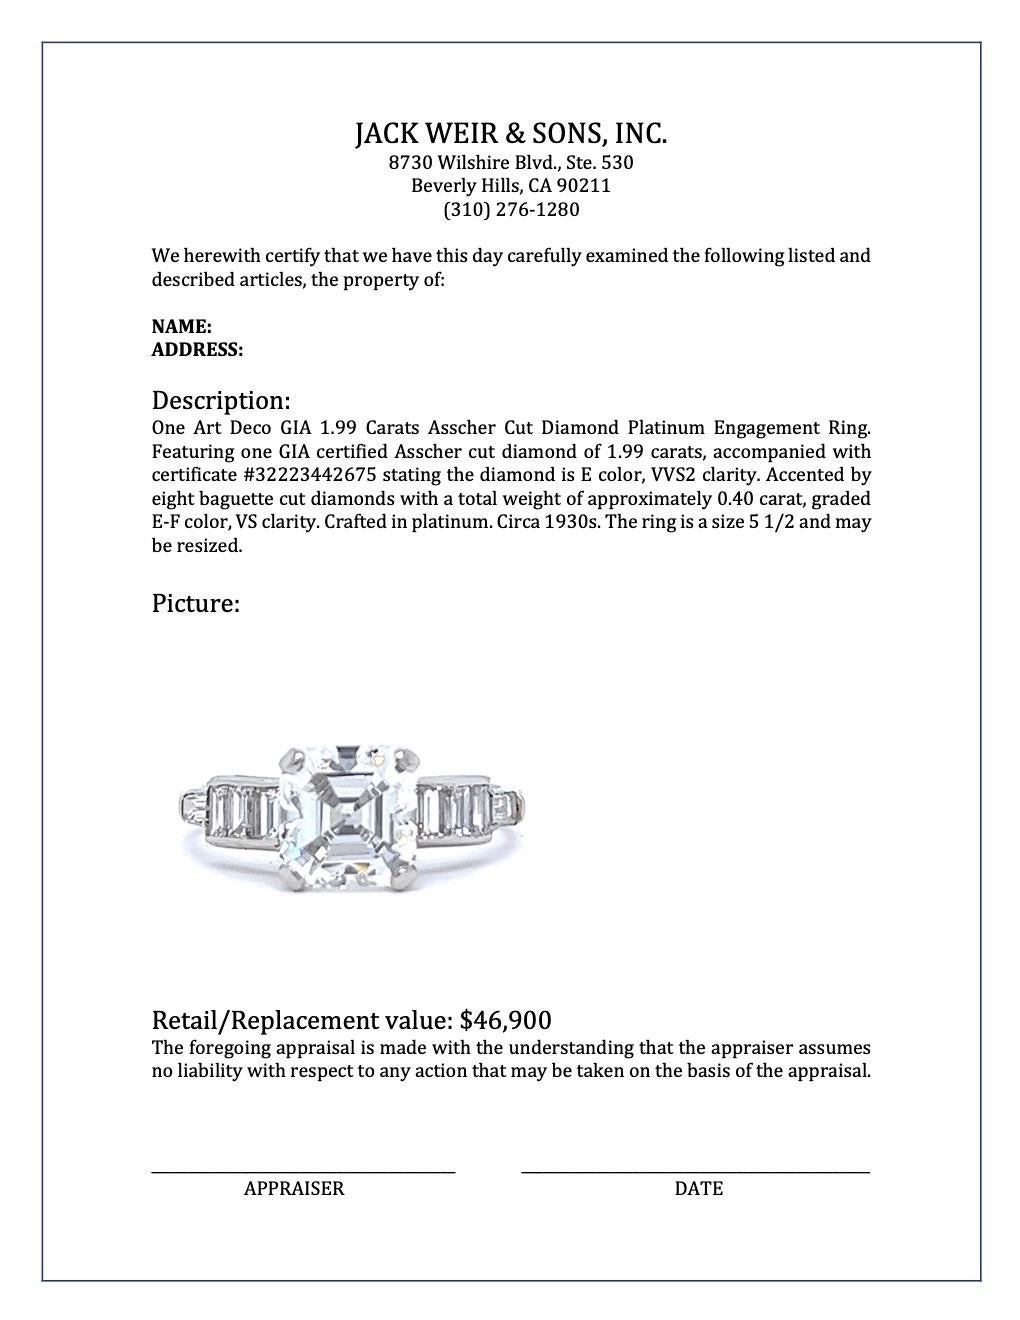 Art Deco GIA 1.99 Carats Asscher Cut Diamond Platinum Engagement Ring 5